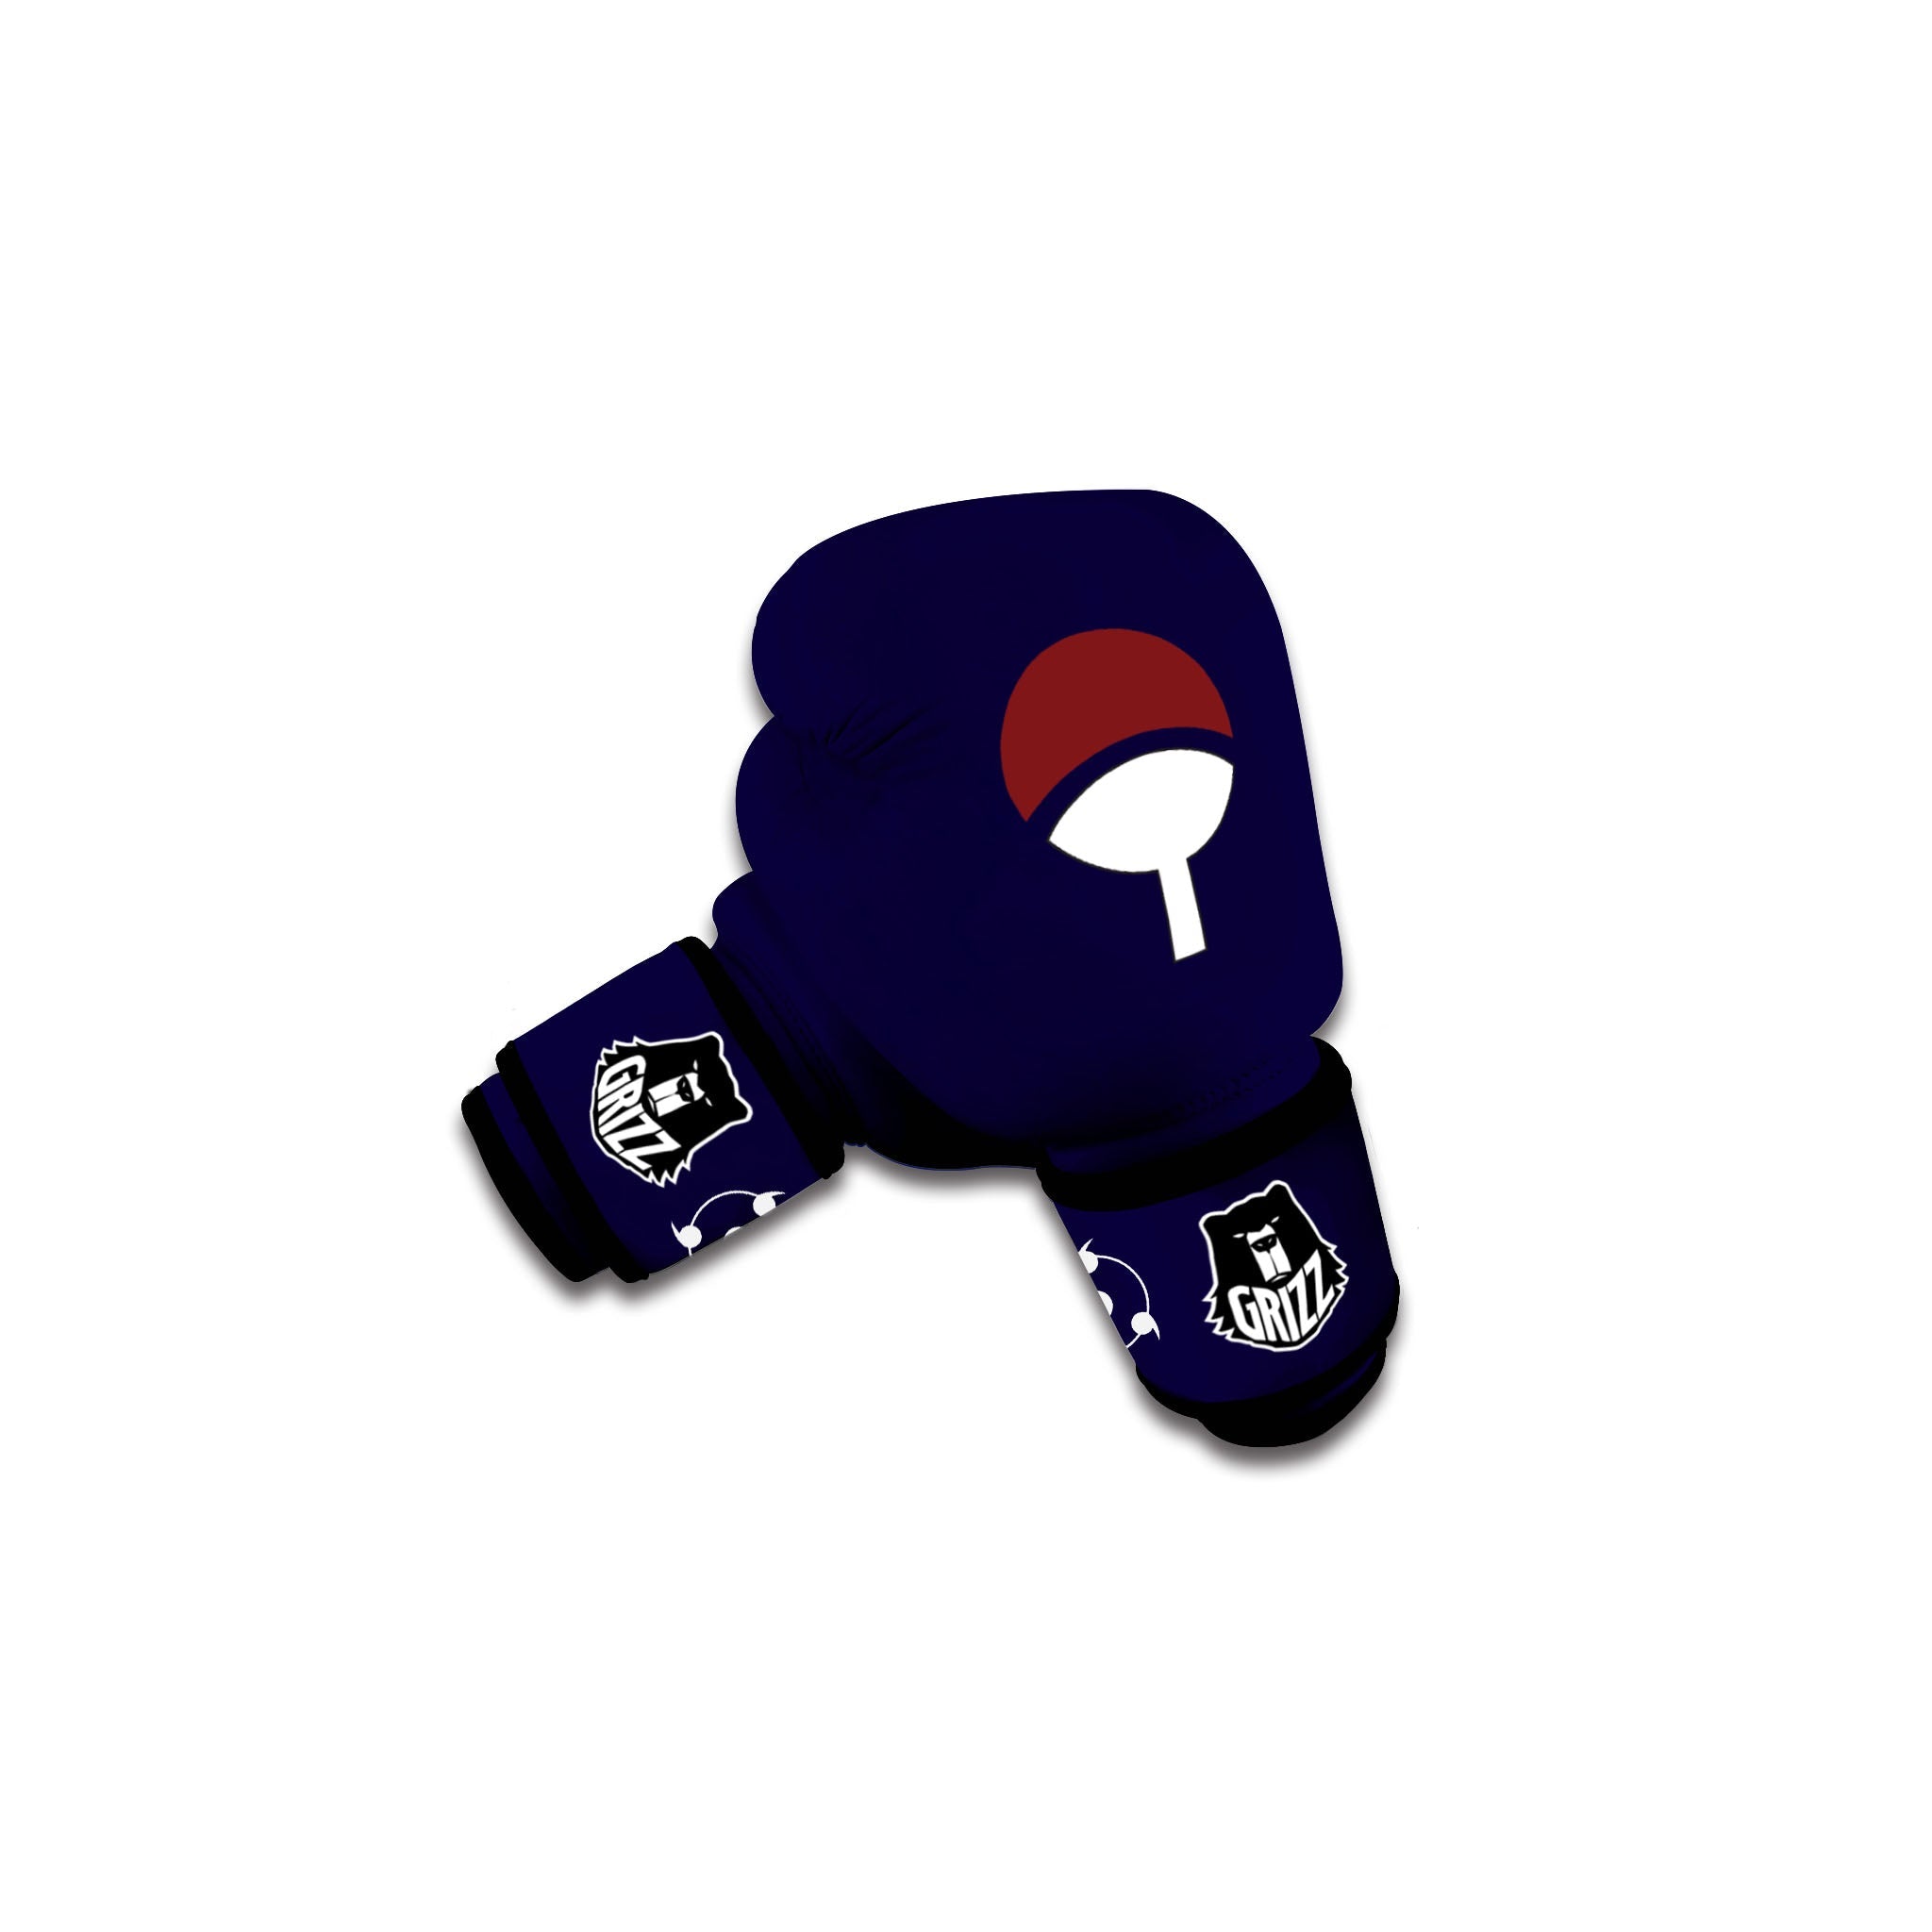 Uchiha Clan Boxing Gloves-grizzshop